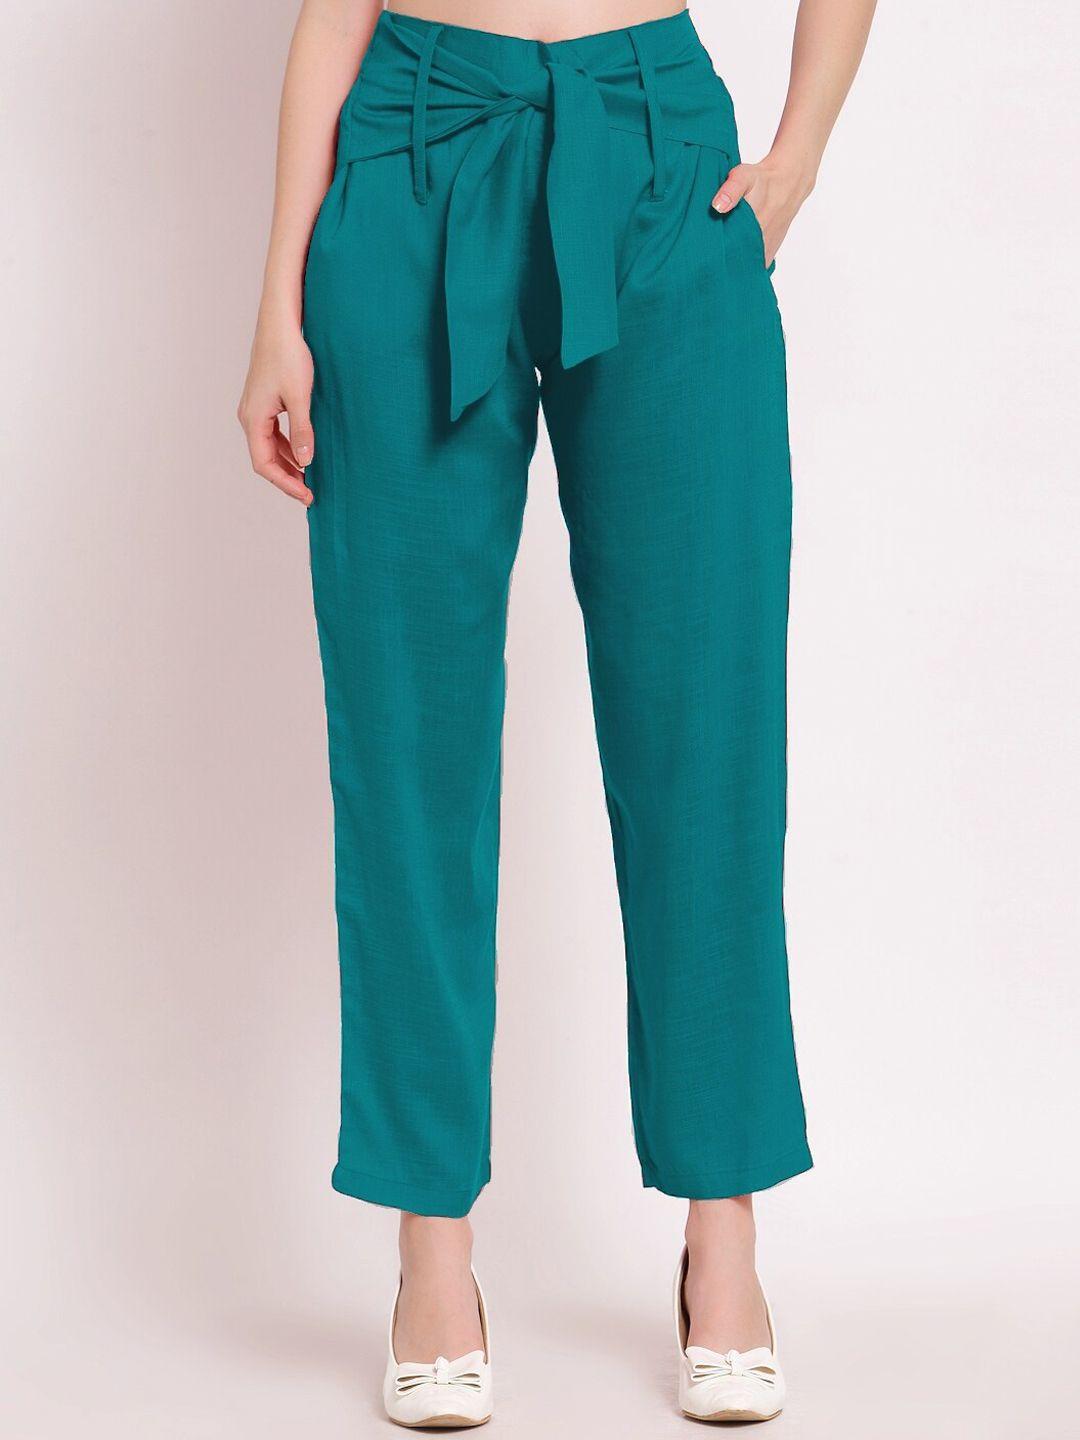 patrorna-women-smart-mid-rise-peg-trousers